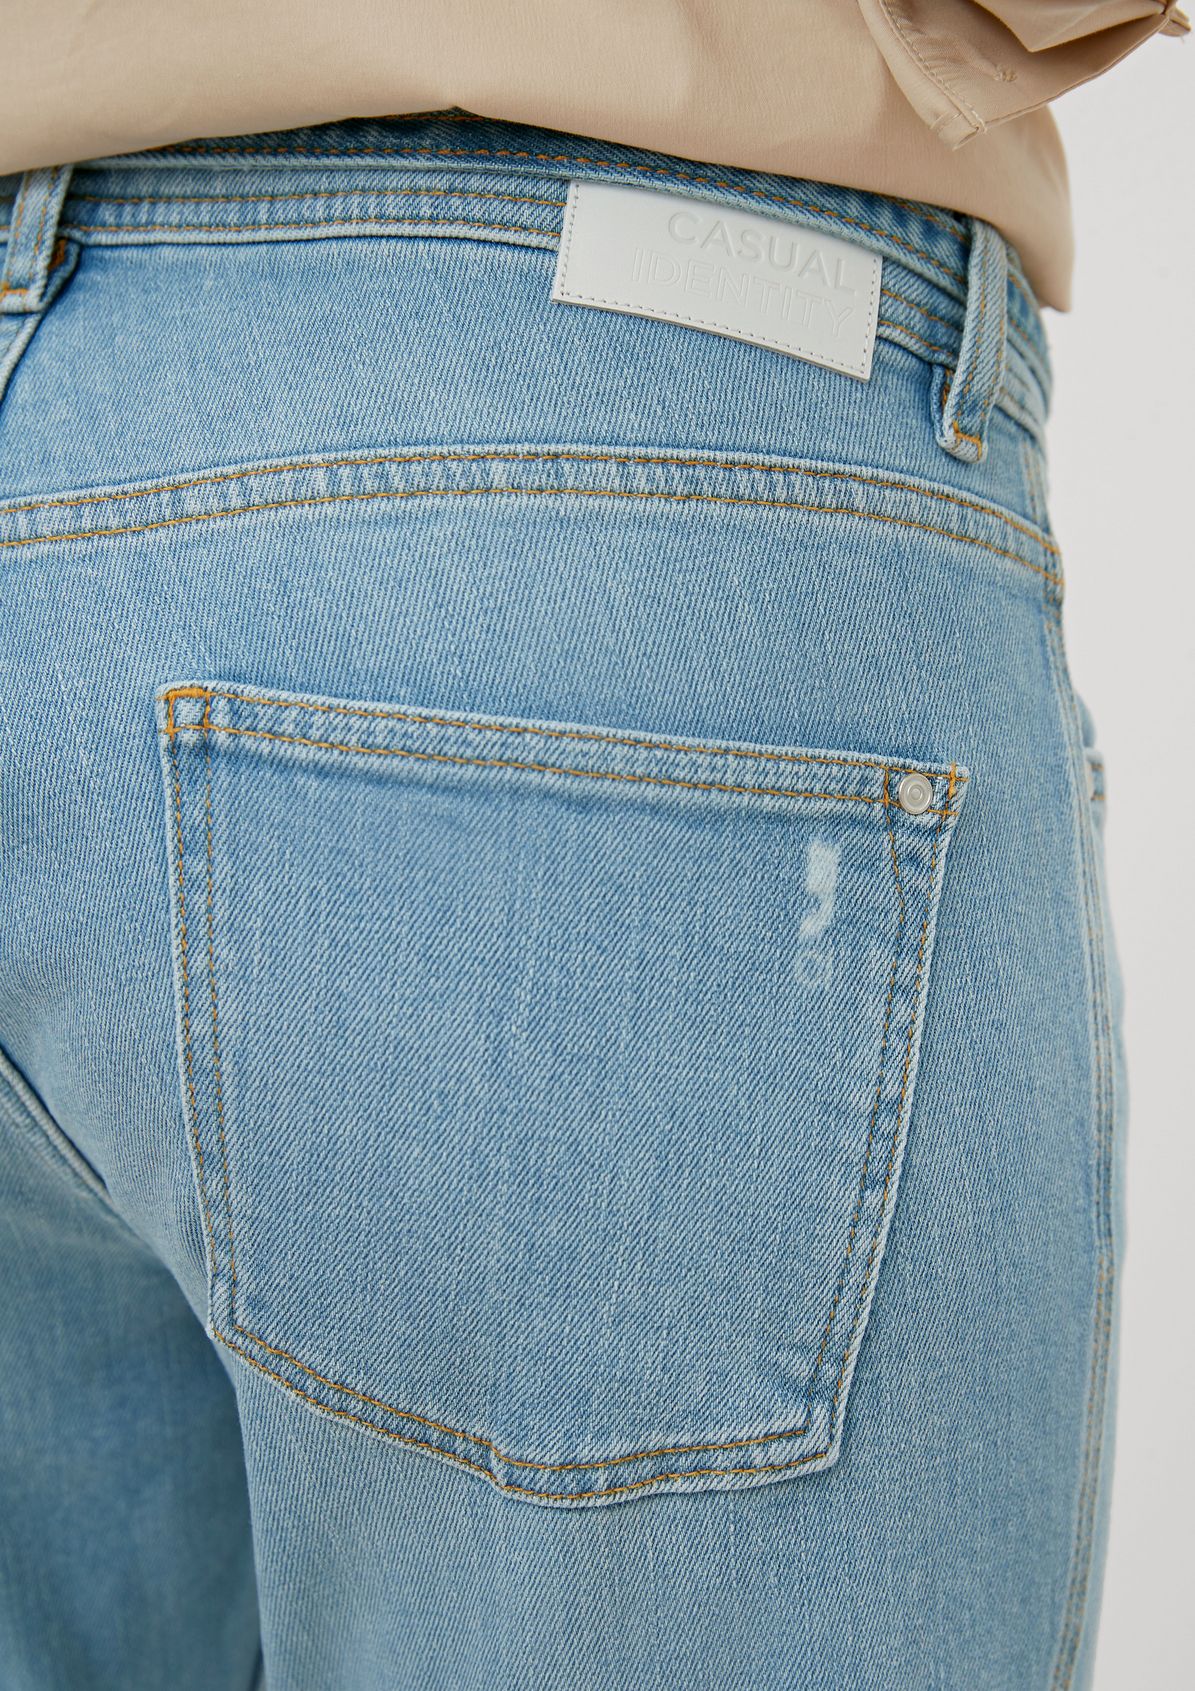 Rabatt 75 % DAMEN Jeans Boyfriend jeans Elastisch Blau L Lier Boyfriend jeans 